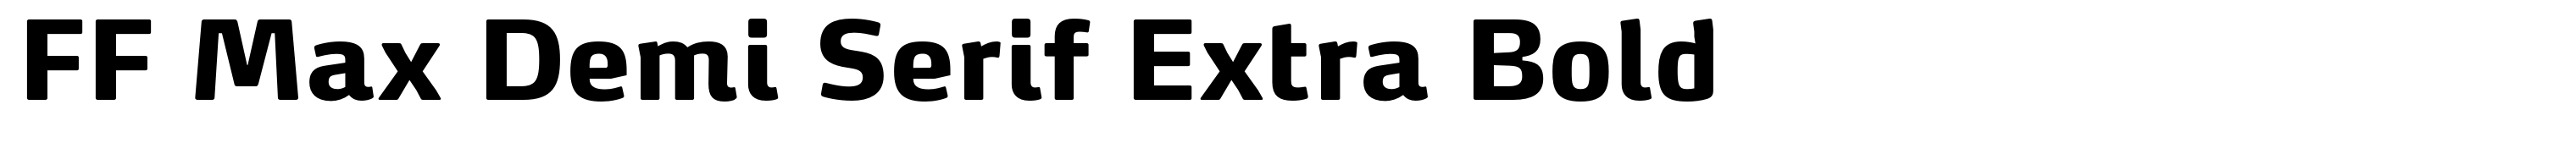 FF Max Demi Serif Extra Bold